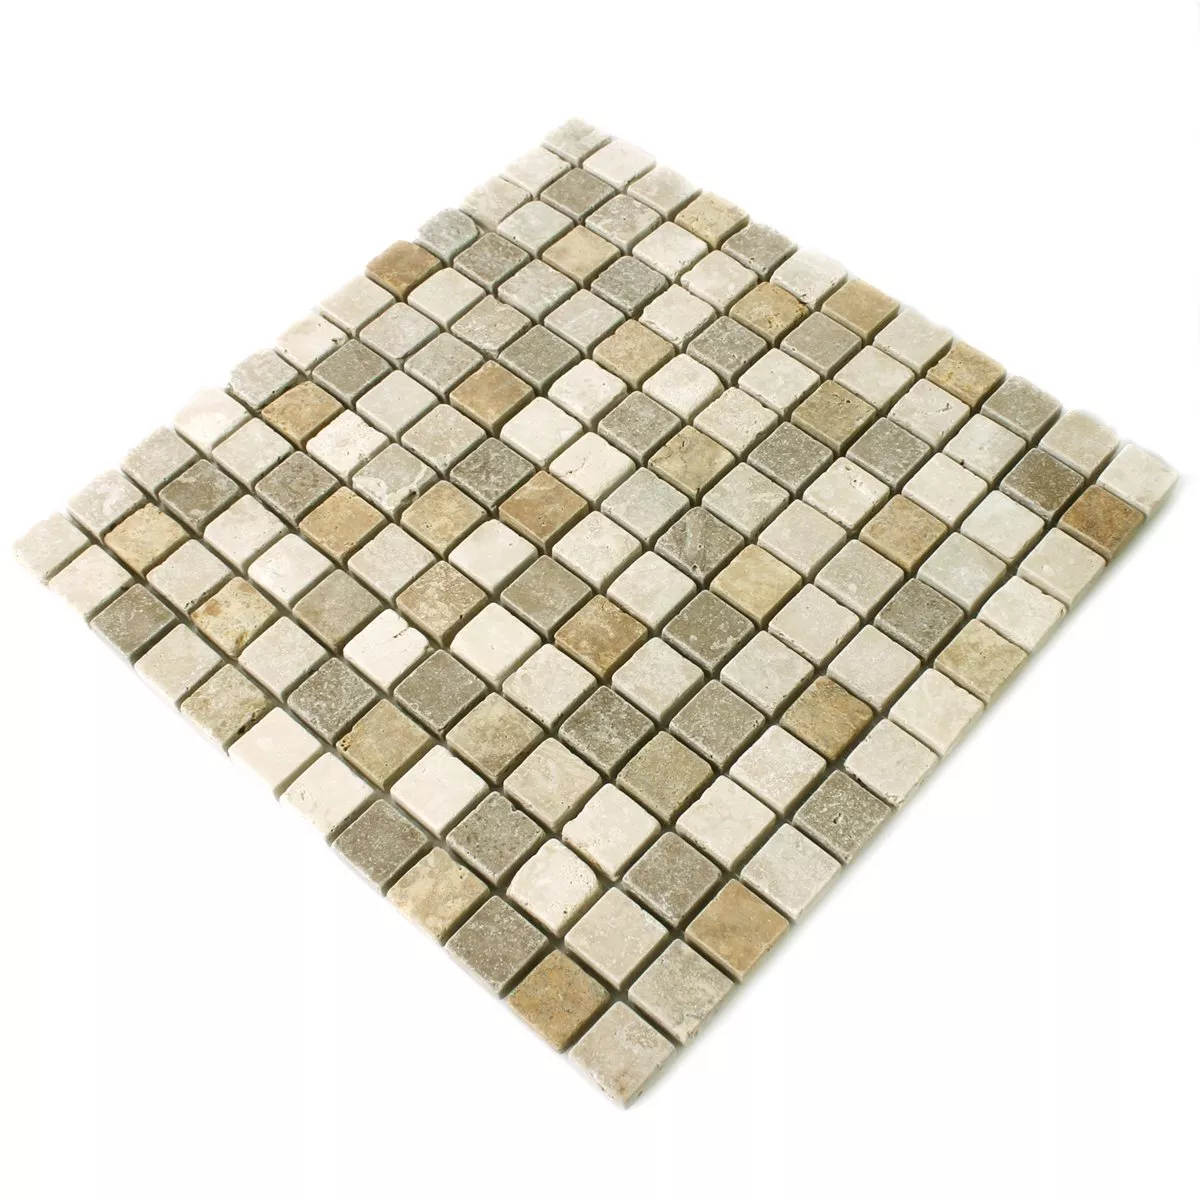 Sample Mosaic Tiles Travertine Brown Beige Red